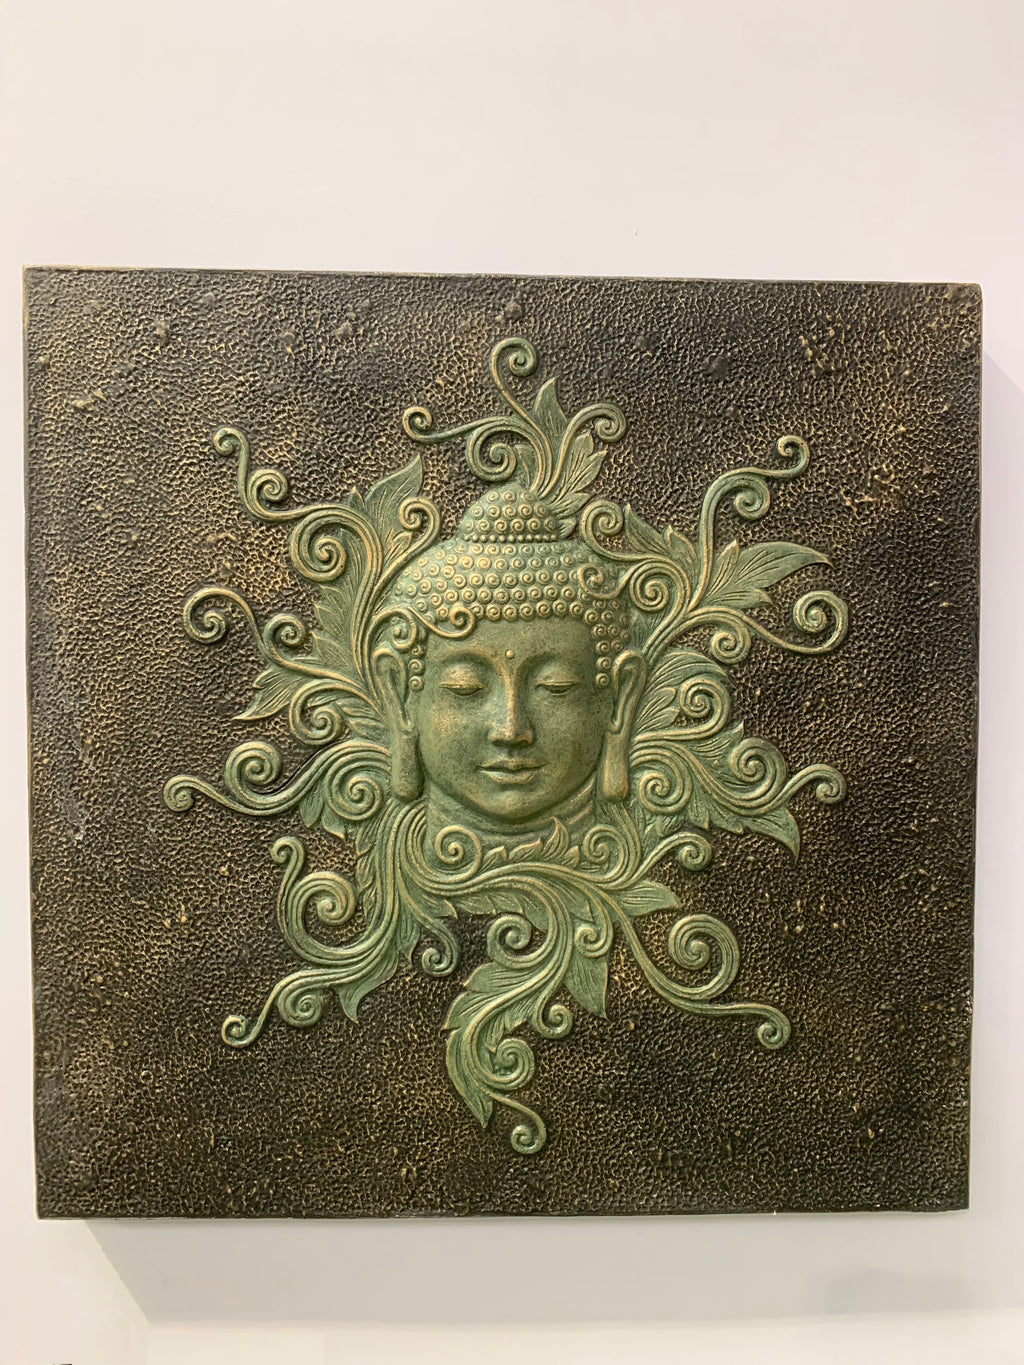 2 Piece Buddha Face wall Plaque – Bali Mystique